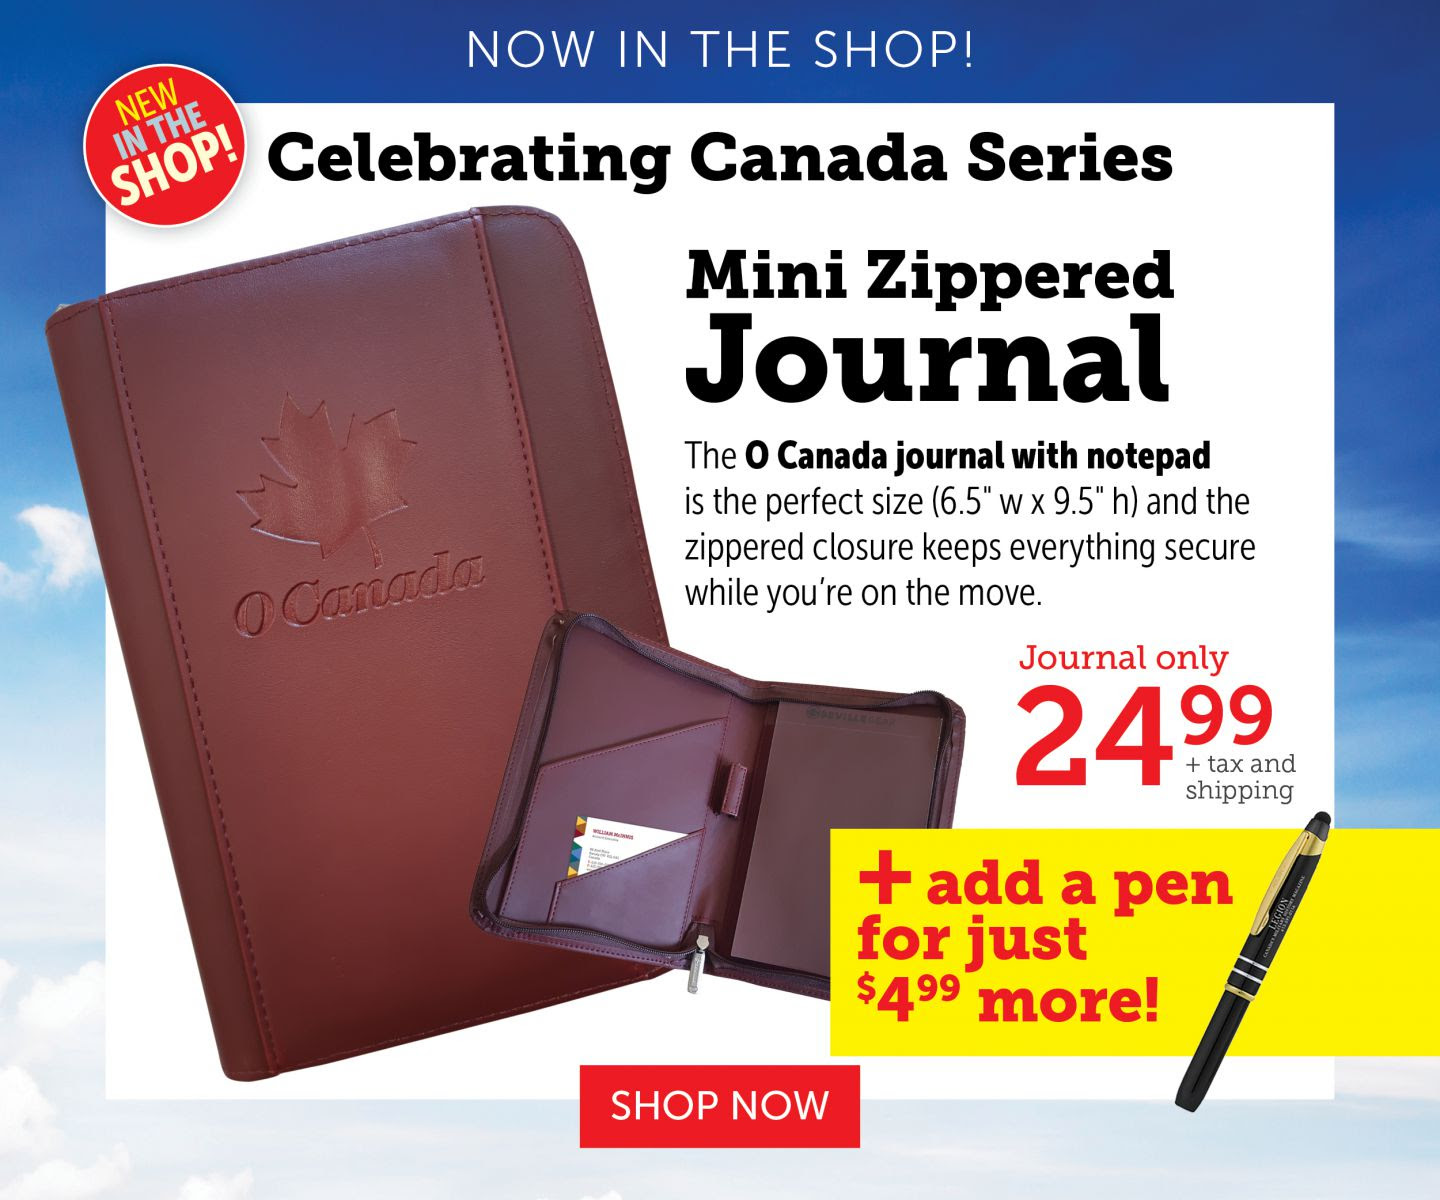 Celebrating Canada Series - O Canada Journal